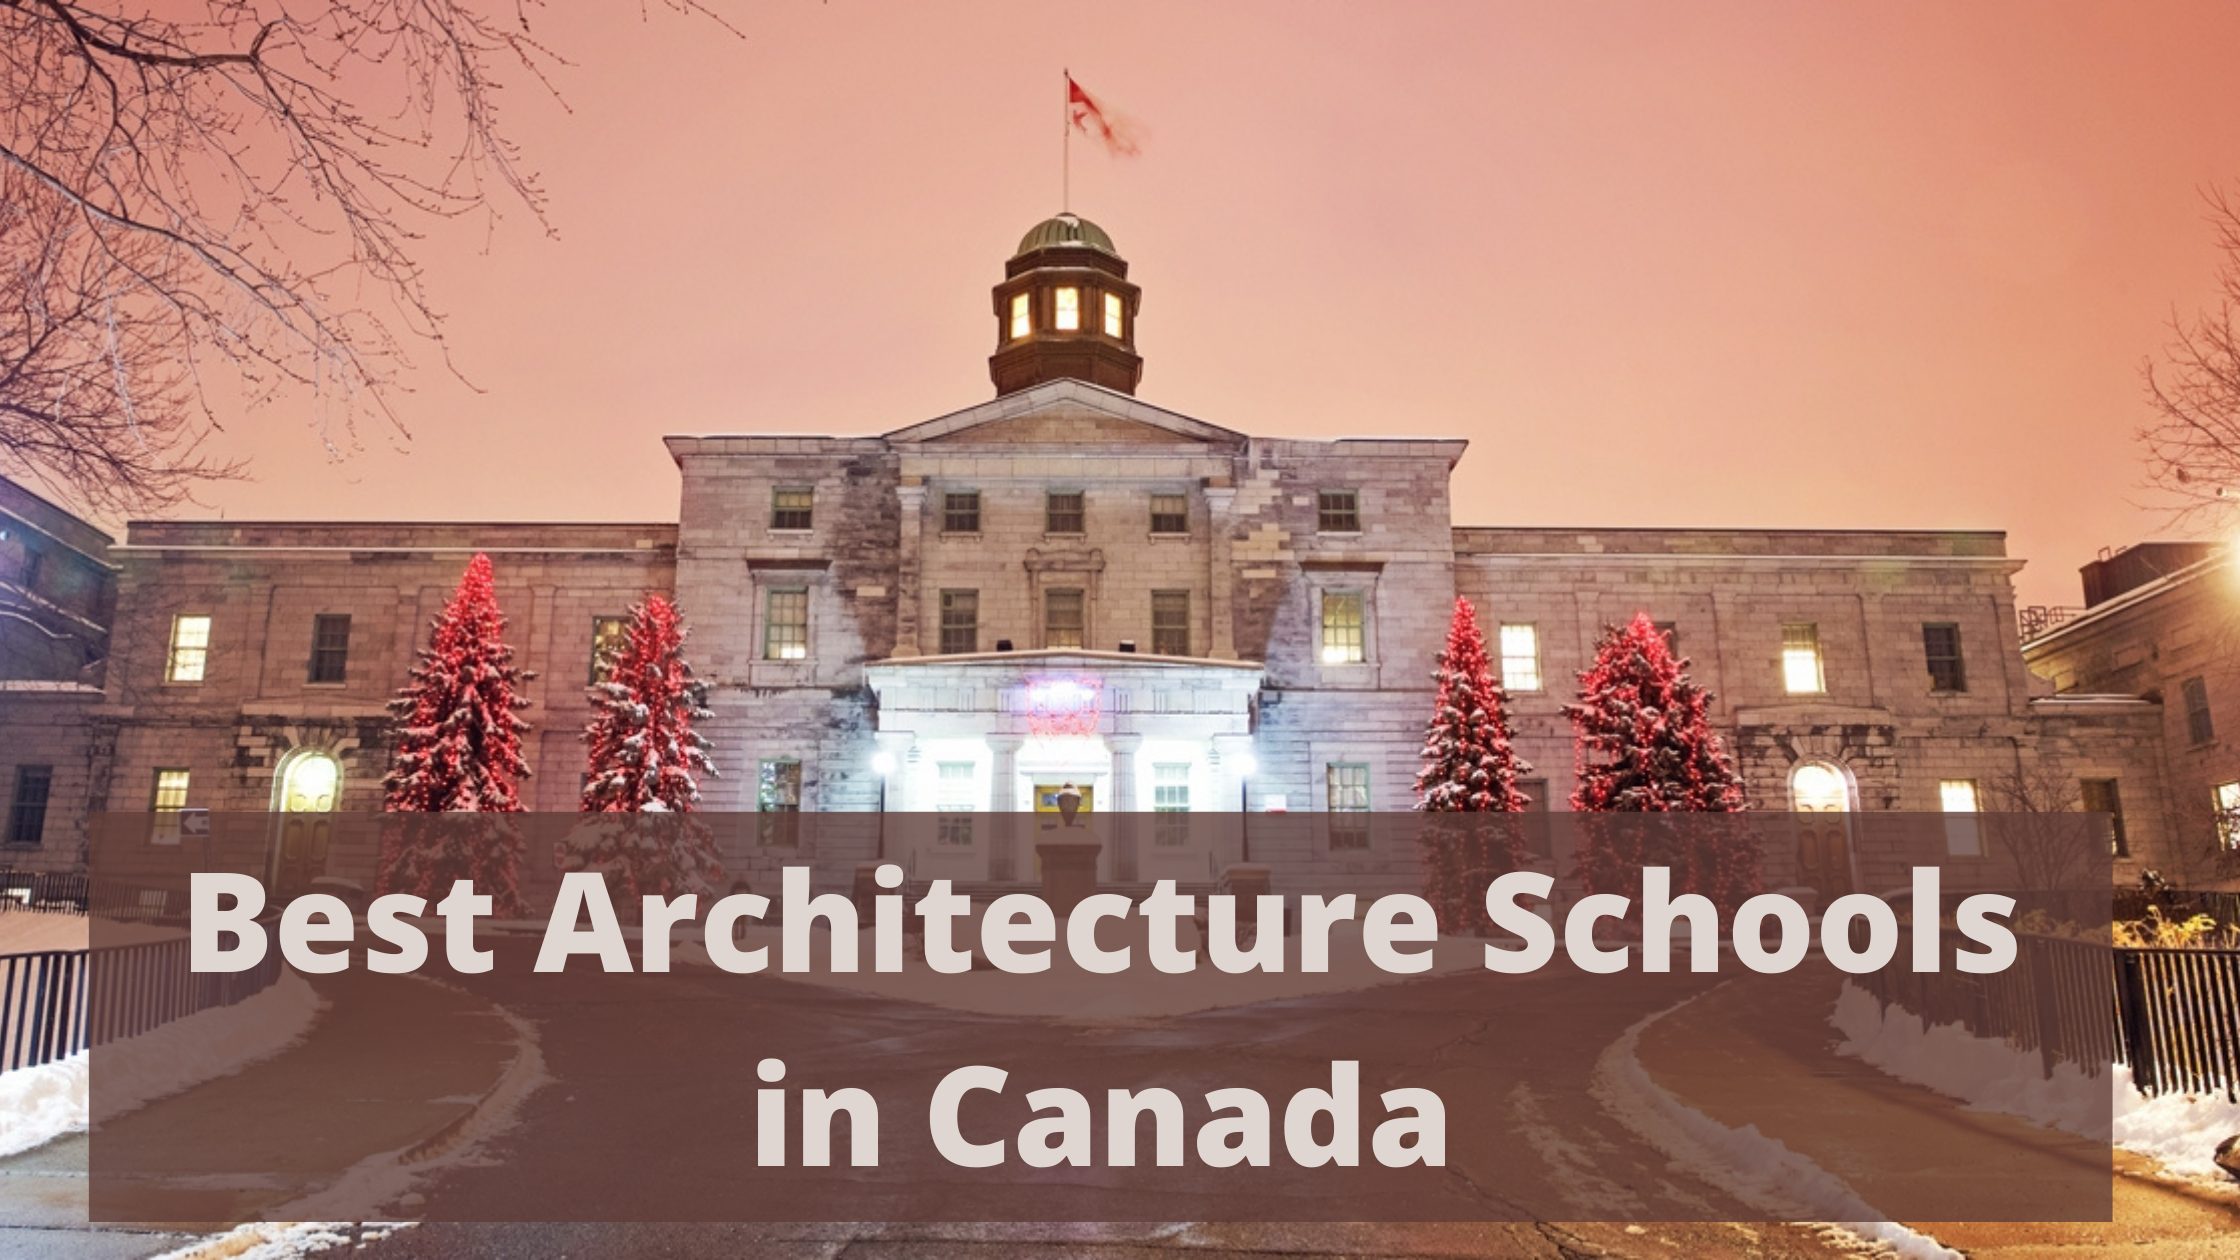 Architecture Schools in Canada: 10 Best Schools in Canada in 2022